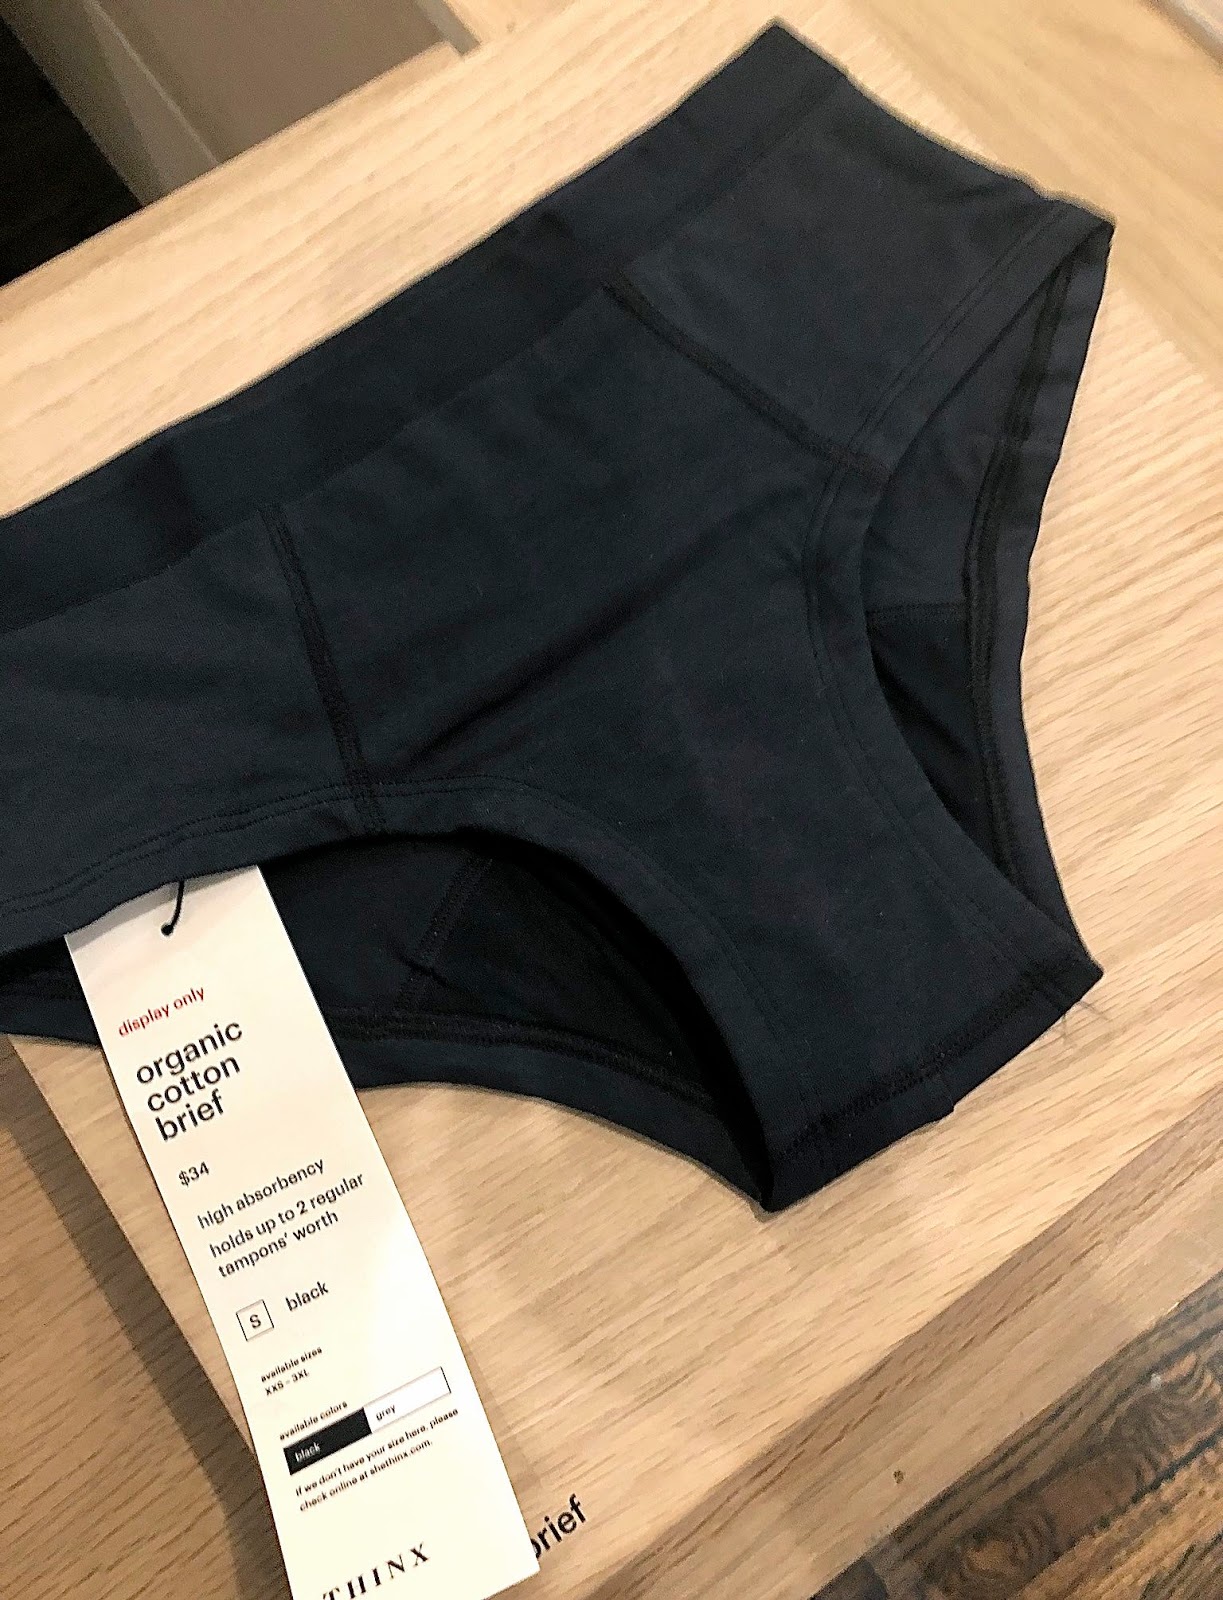 $10 off Thinx period underwear referral/coupon